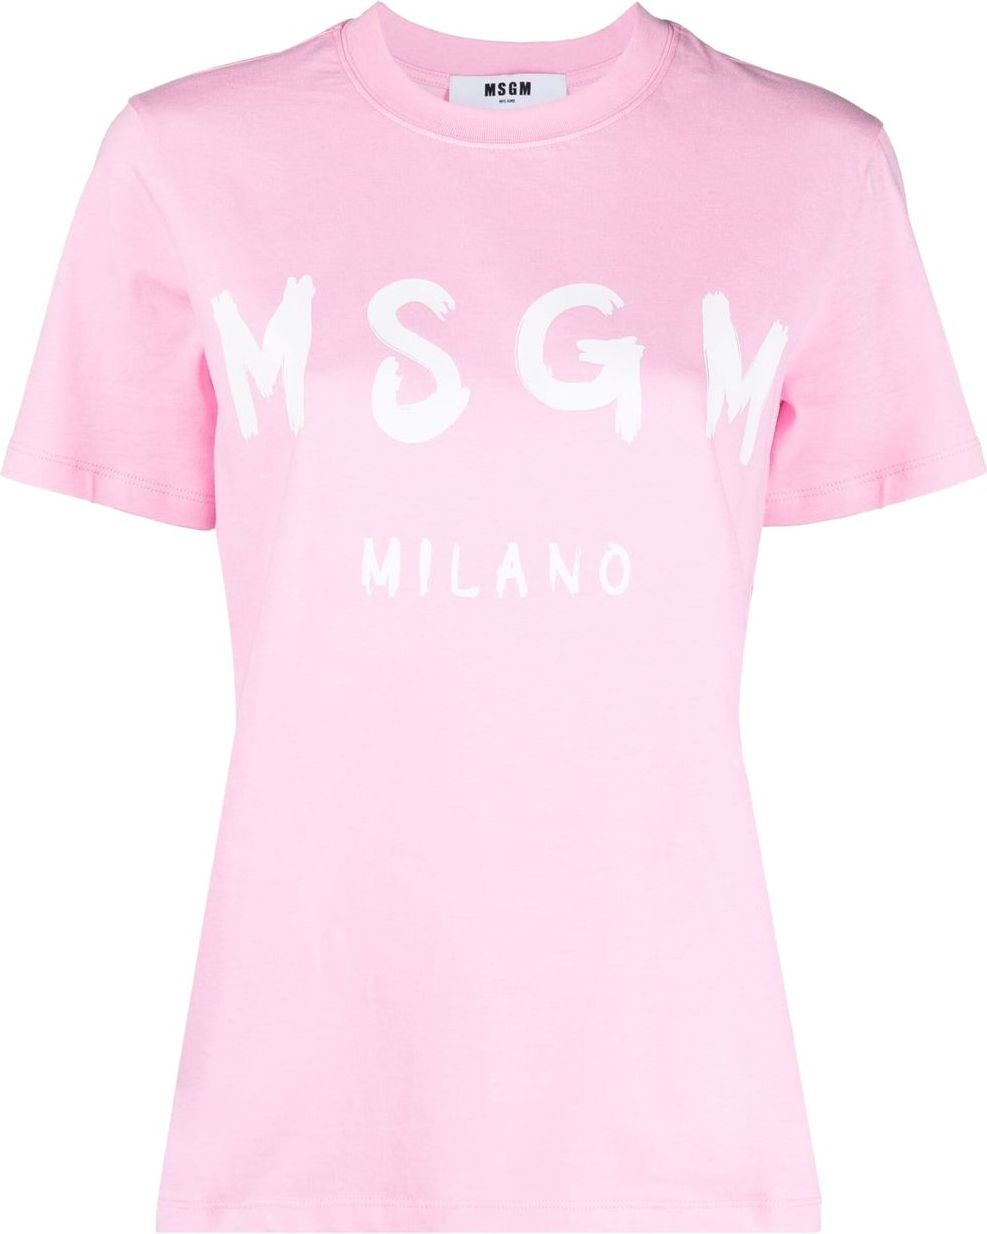 MSGM t-shirt pink Roze